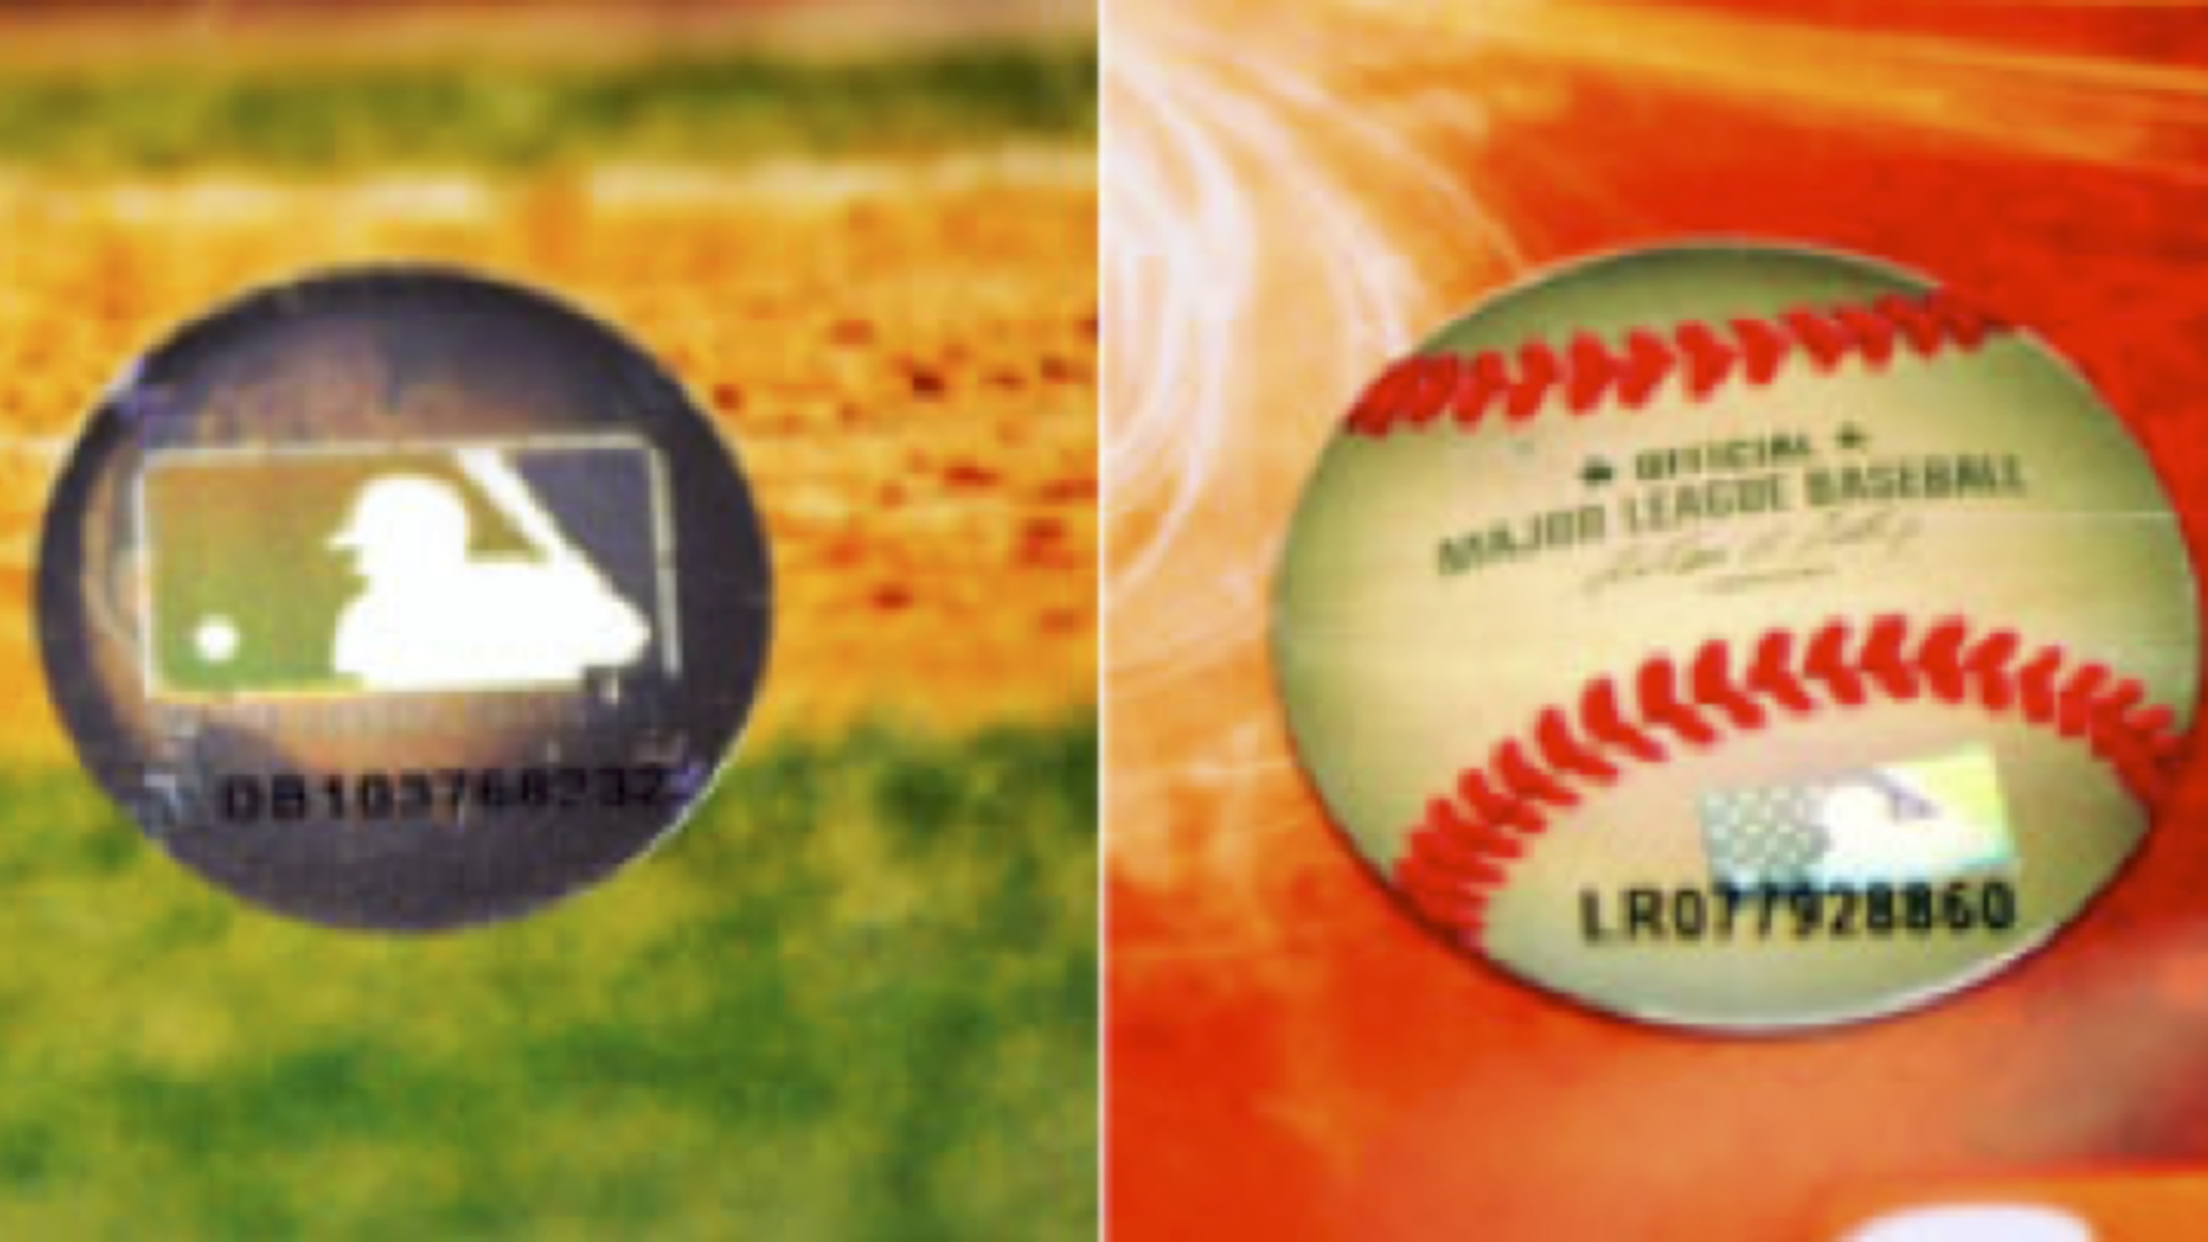 MLB Authentication, Hologram Authenticator